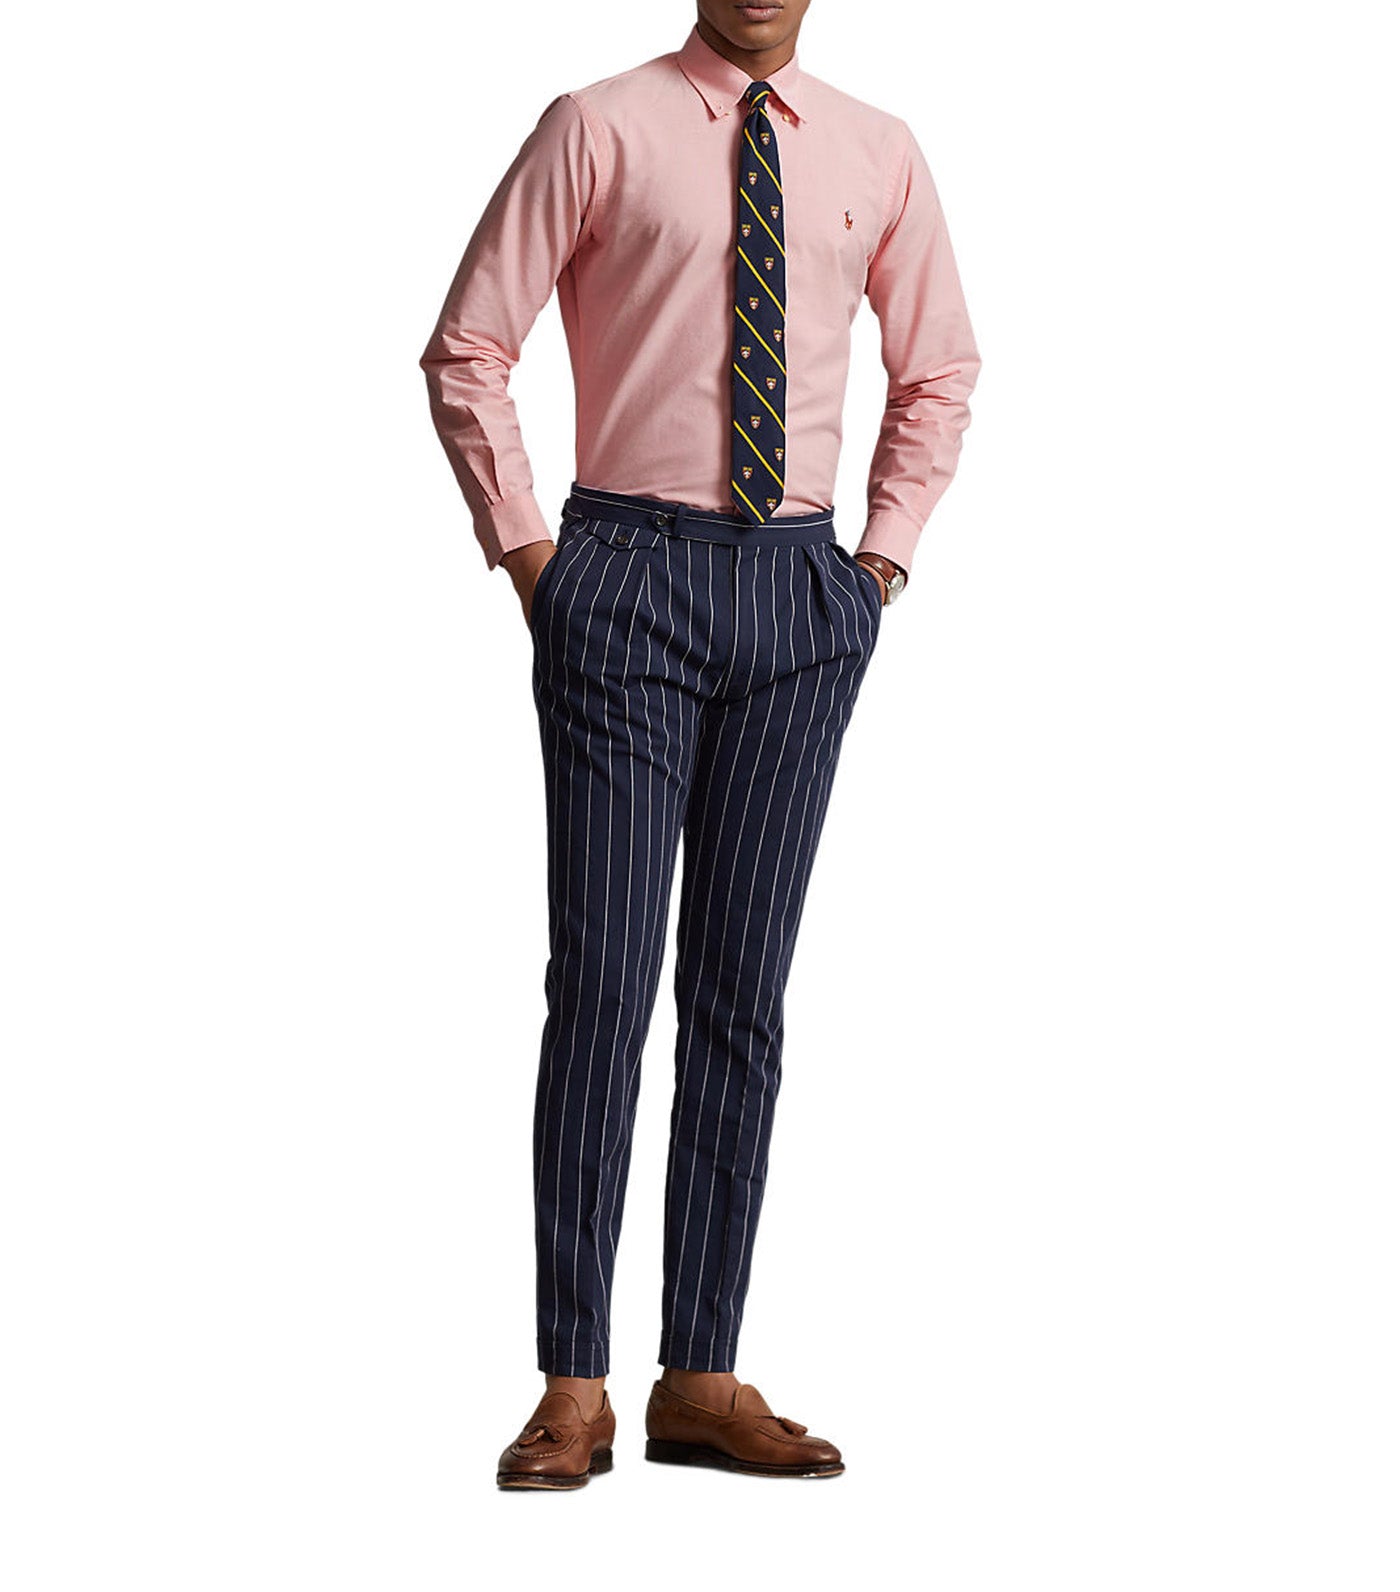 Men's Custom Fit Oxford Shirt Pink